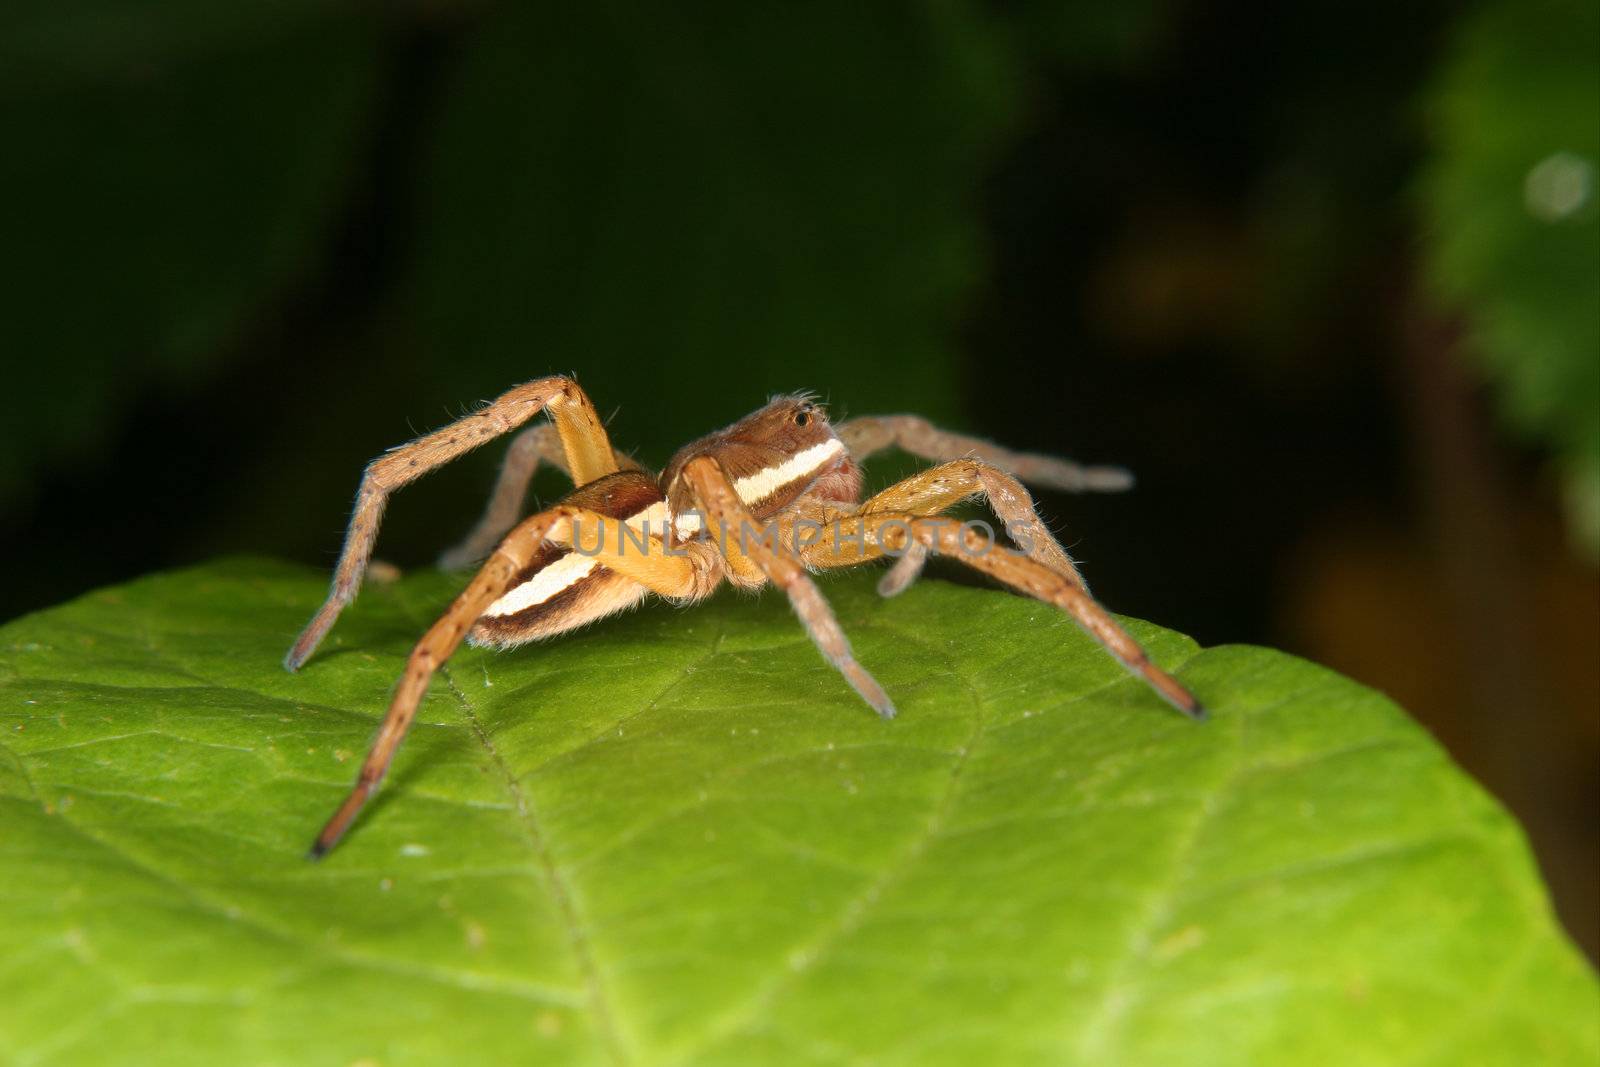 Raft spider (Dolomedes fimbriatus) by tdietrich